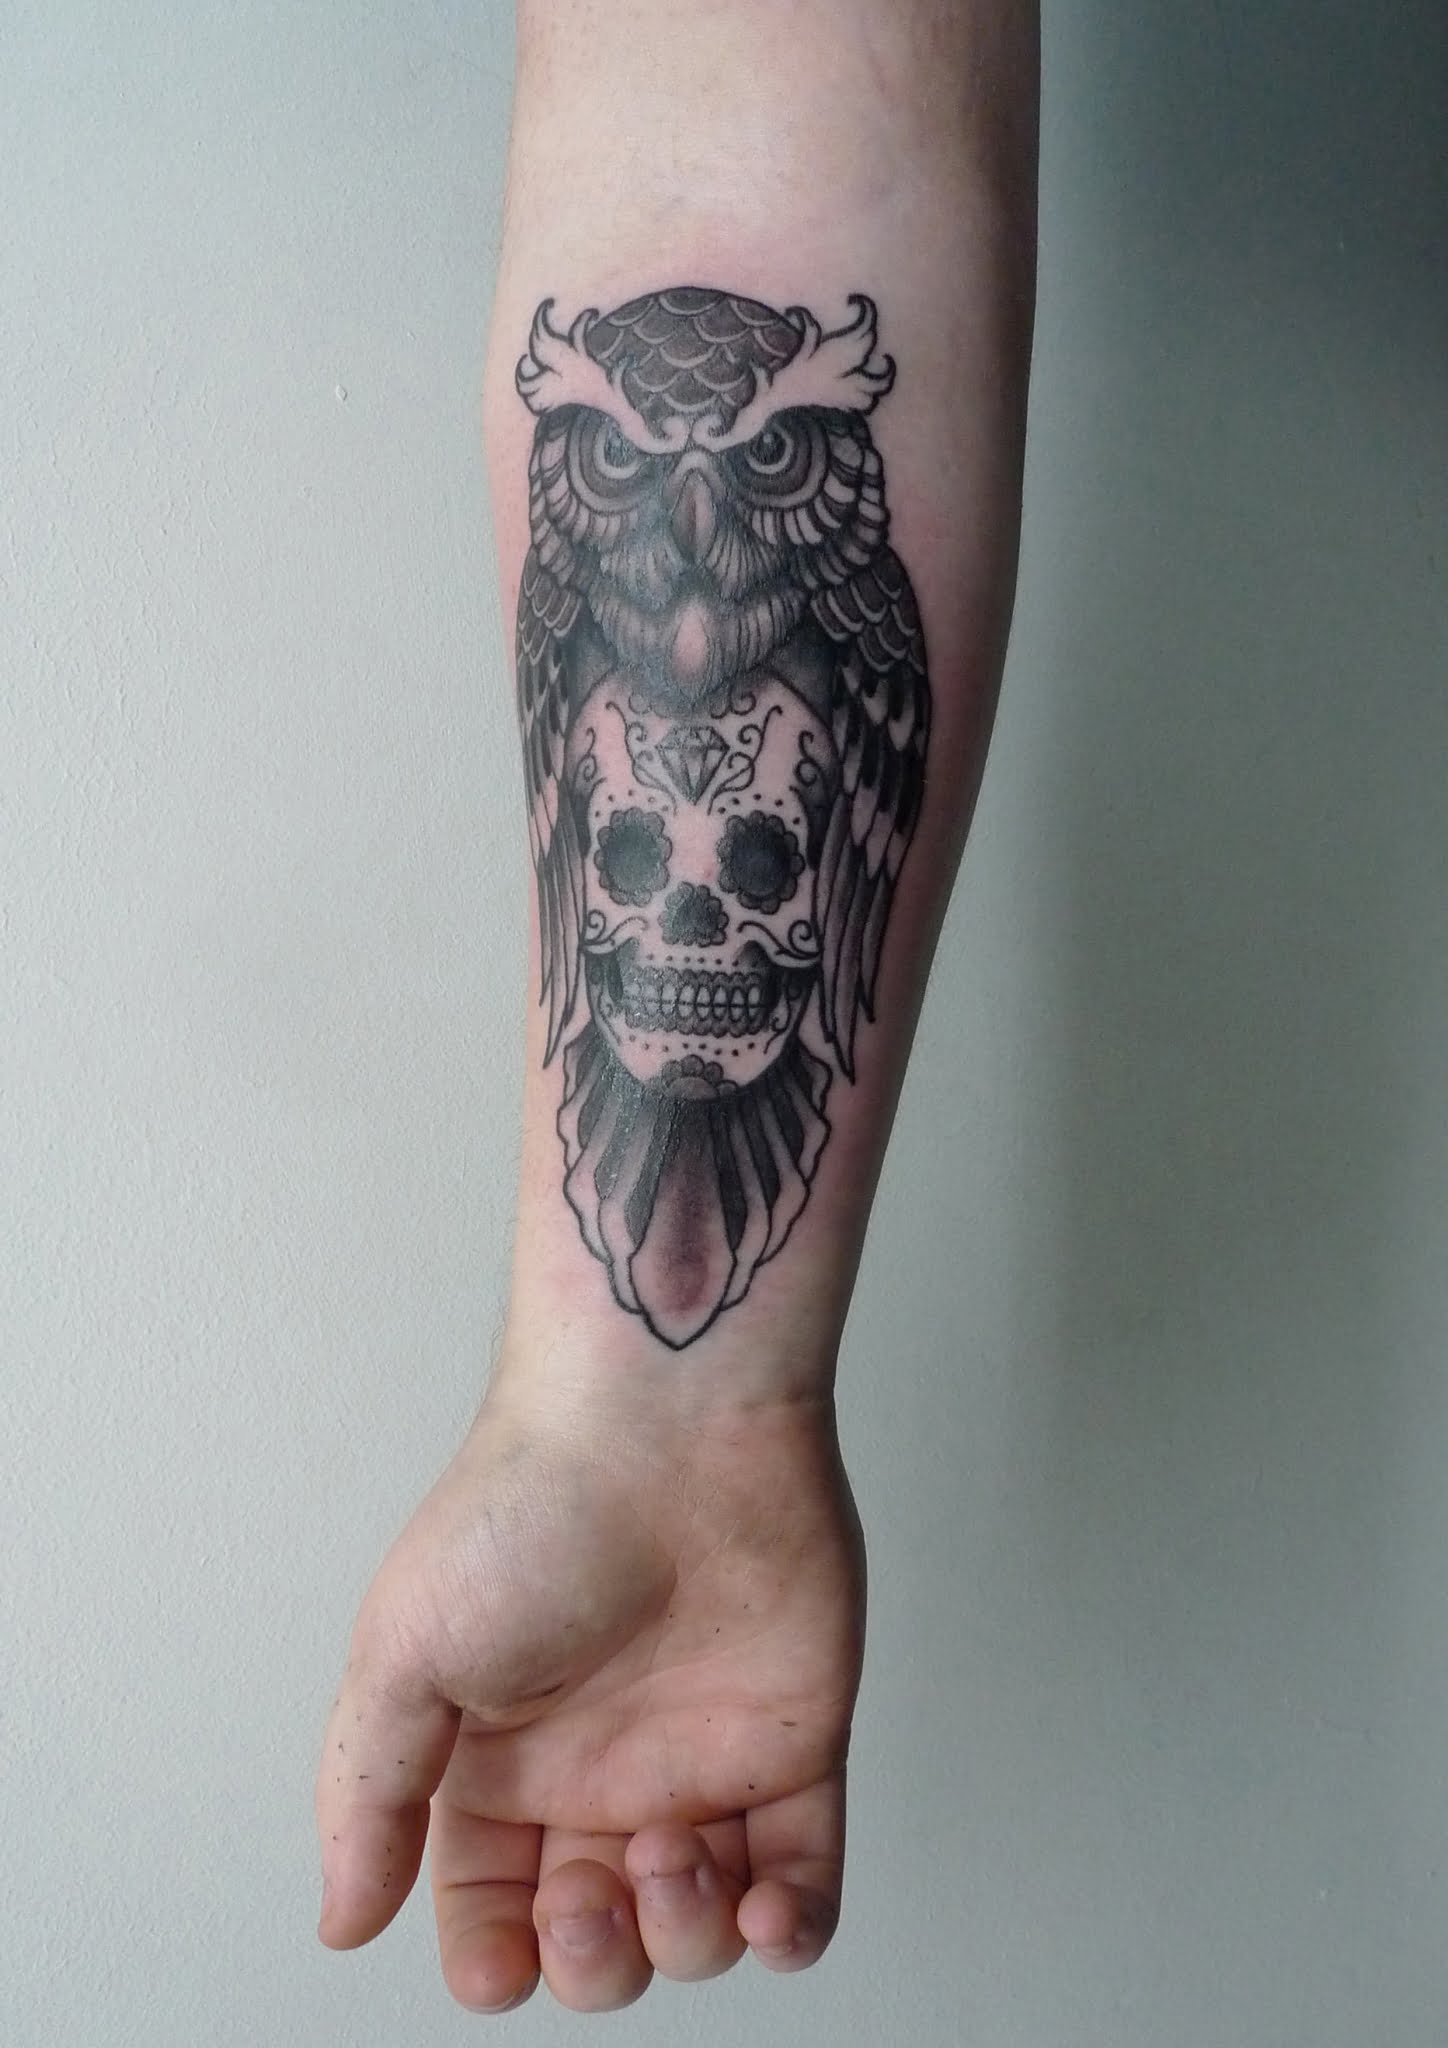 Owl and skull tattoo